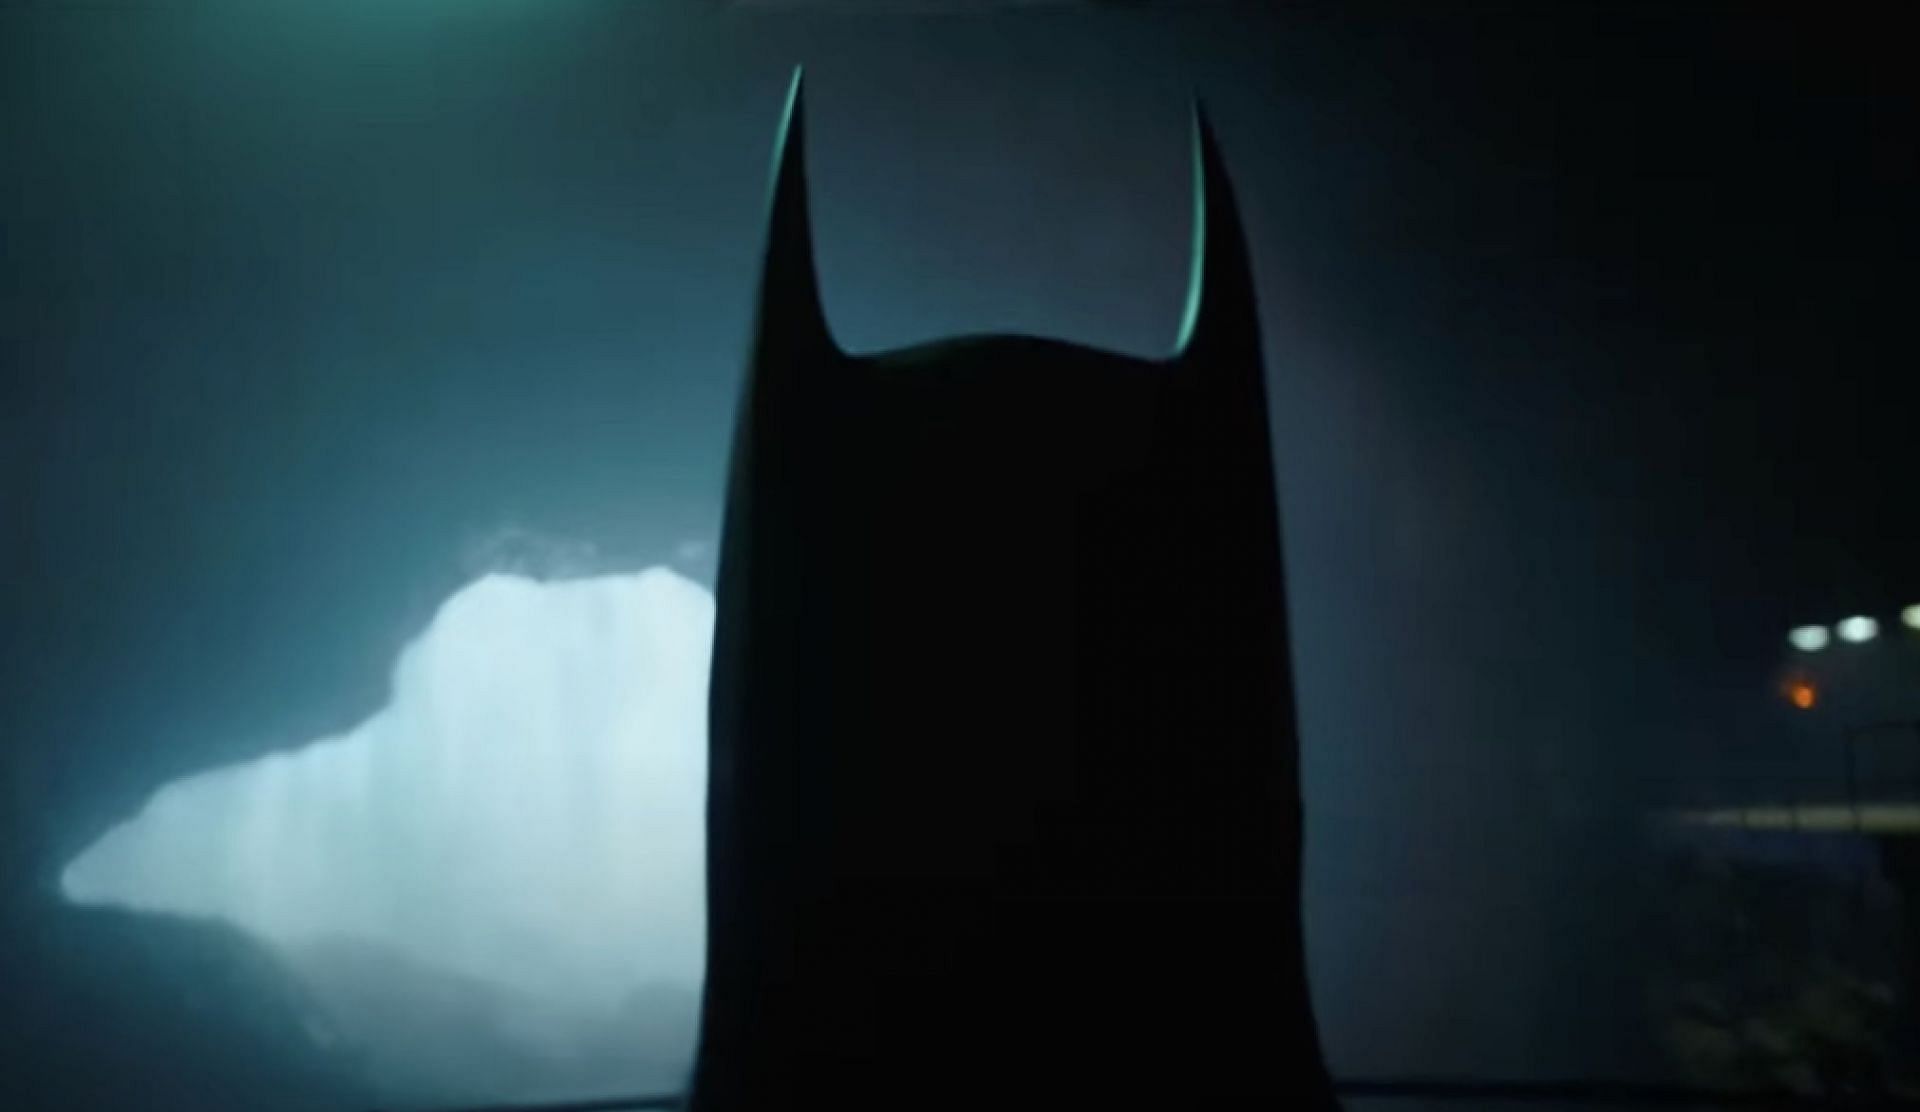 Michael Keaton as Batman in The Flash (2023)